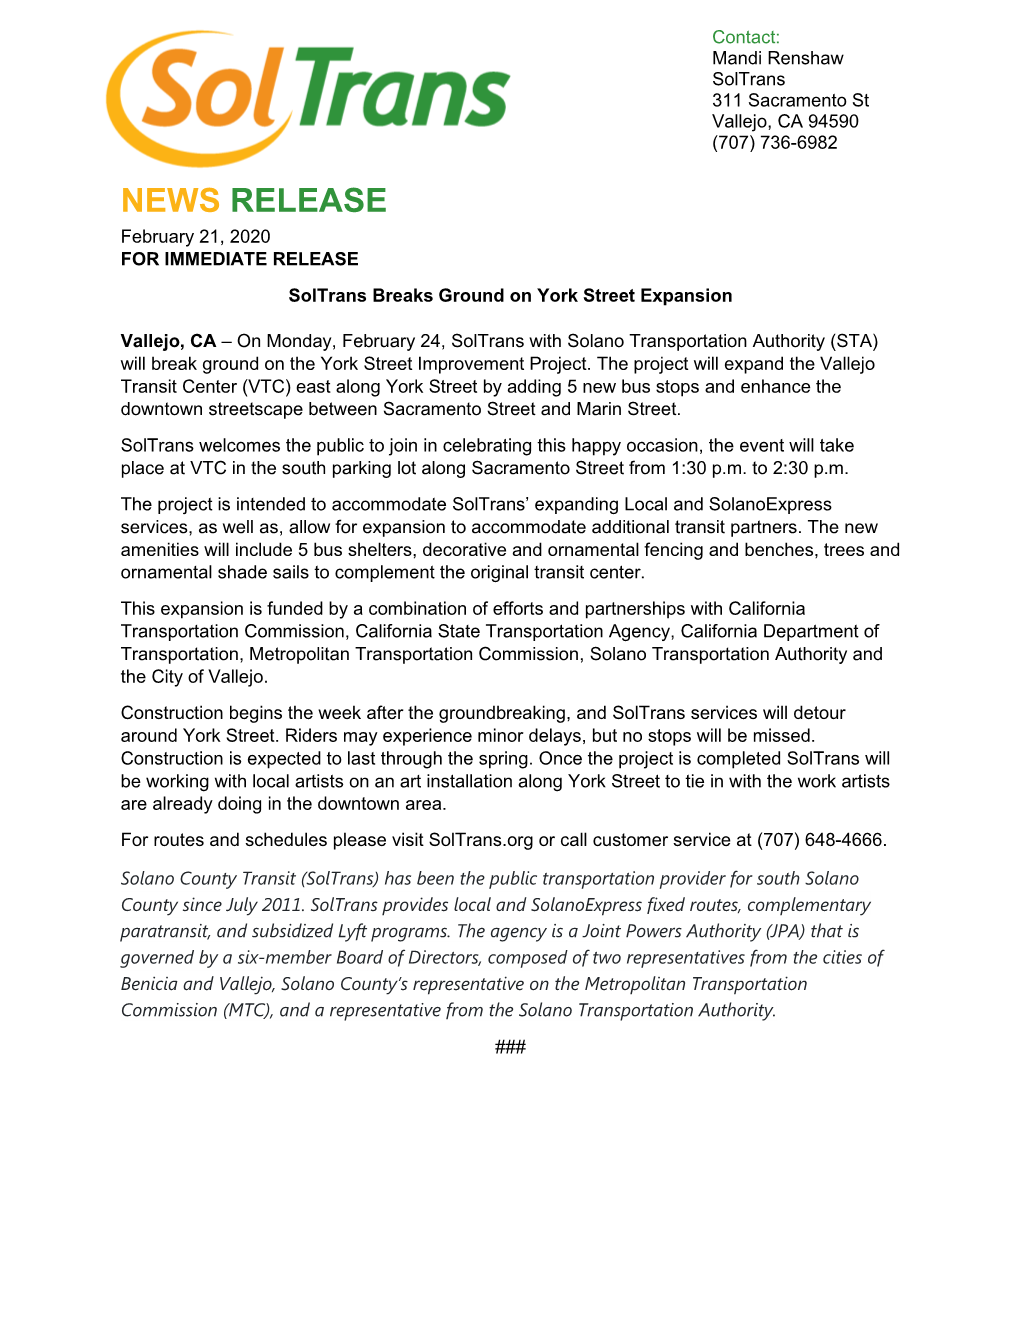 NEWS RELEASE February 21, 2020 for IMMEDIATE RELEASE Soltrans Breaks Ground on York Street Expansion